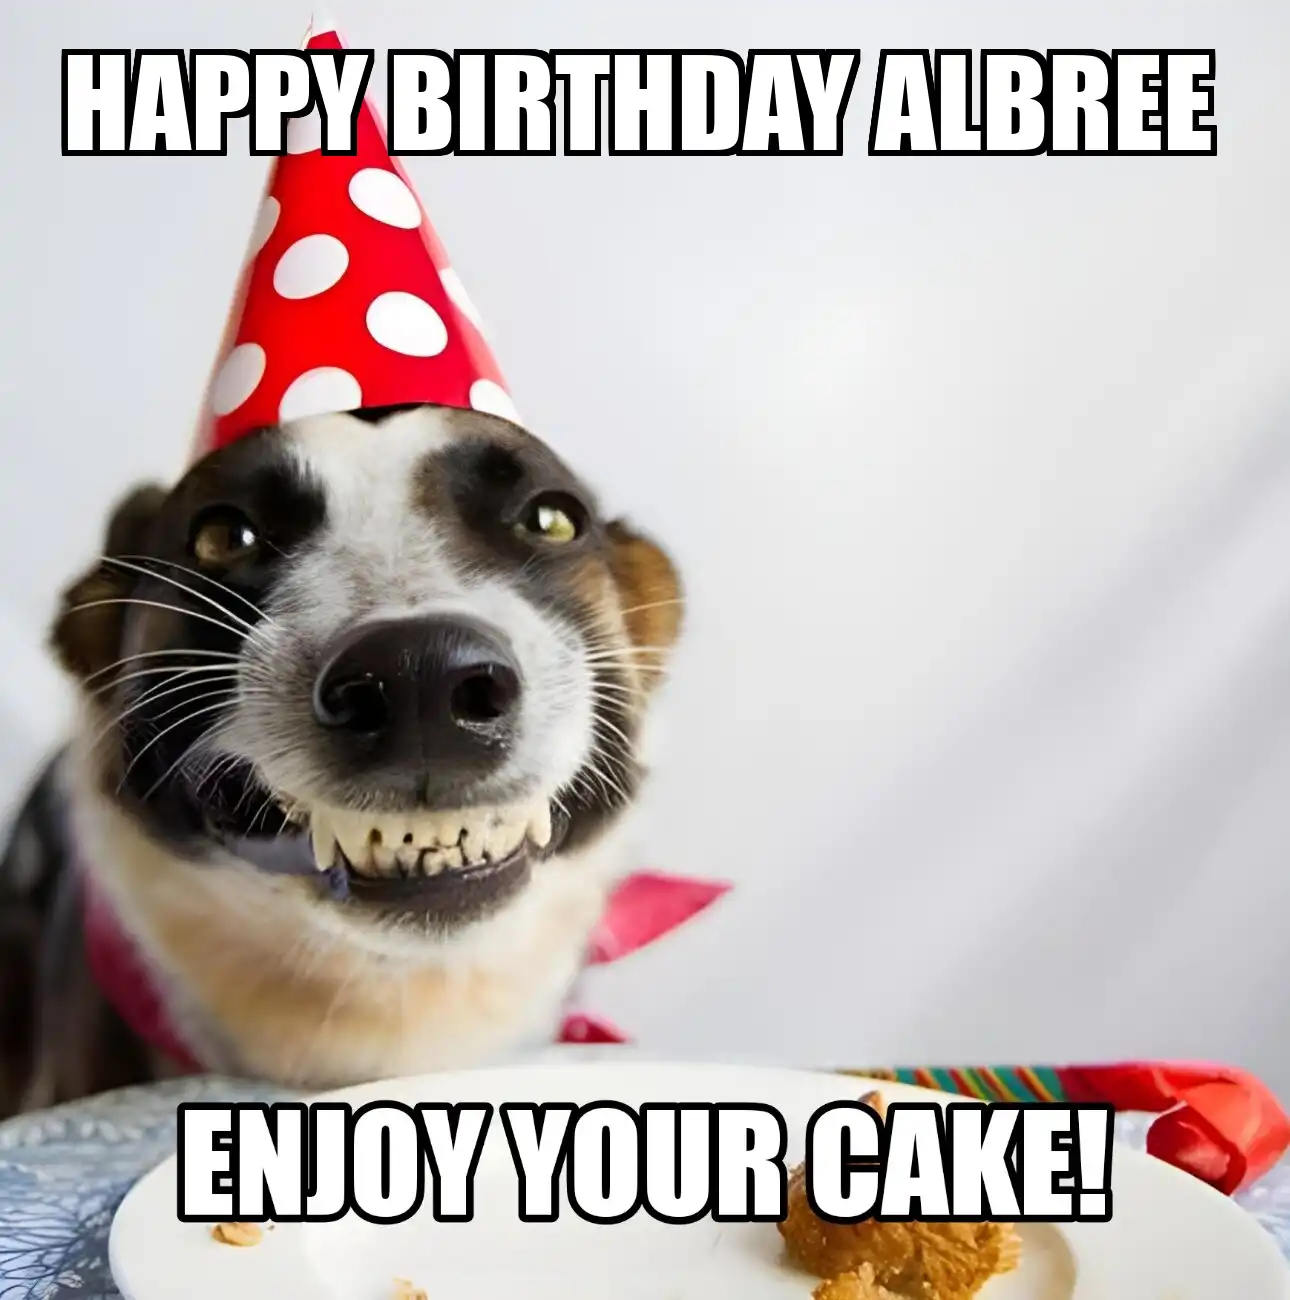 Happy Birthday Albree Enjoy Your Cake Dog Meme